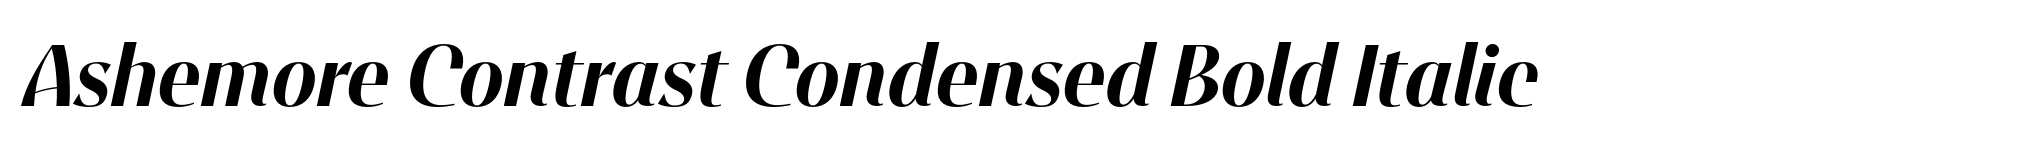 Ashemore Contrast Condensed Bold Italic image